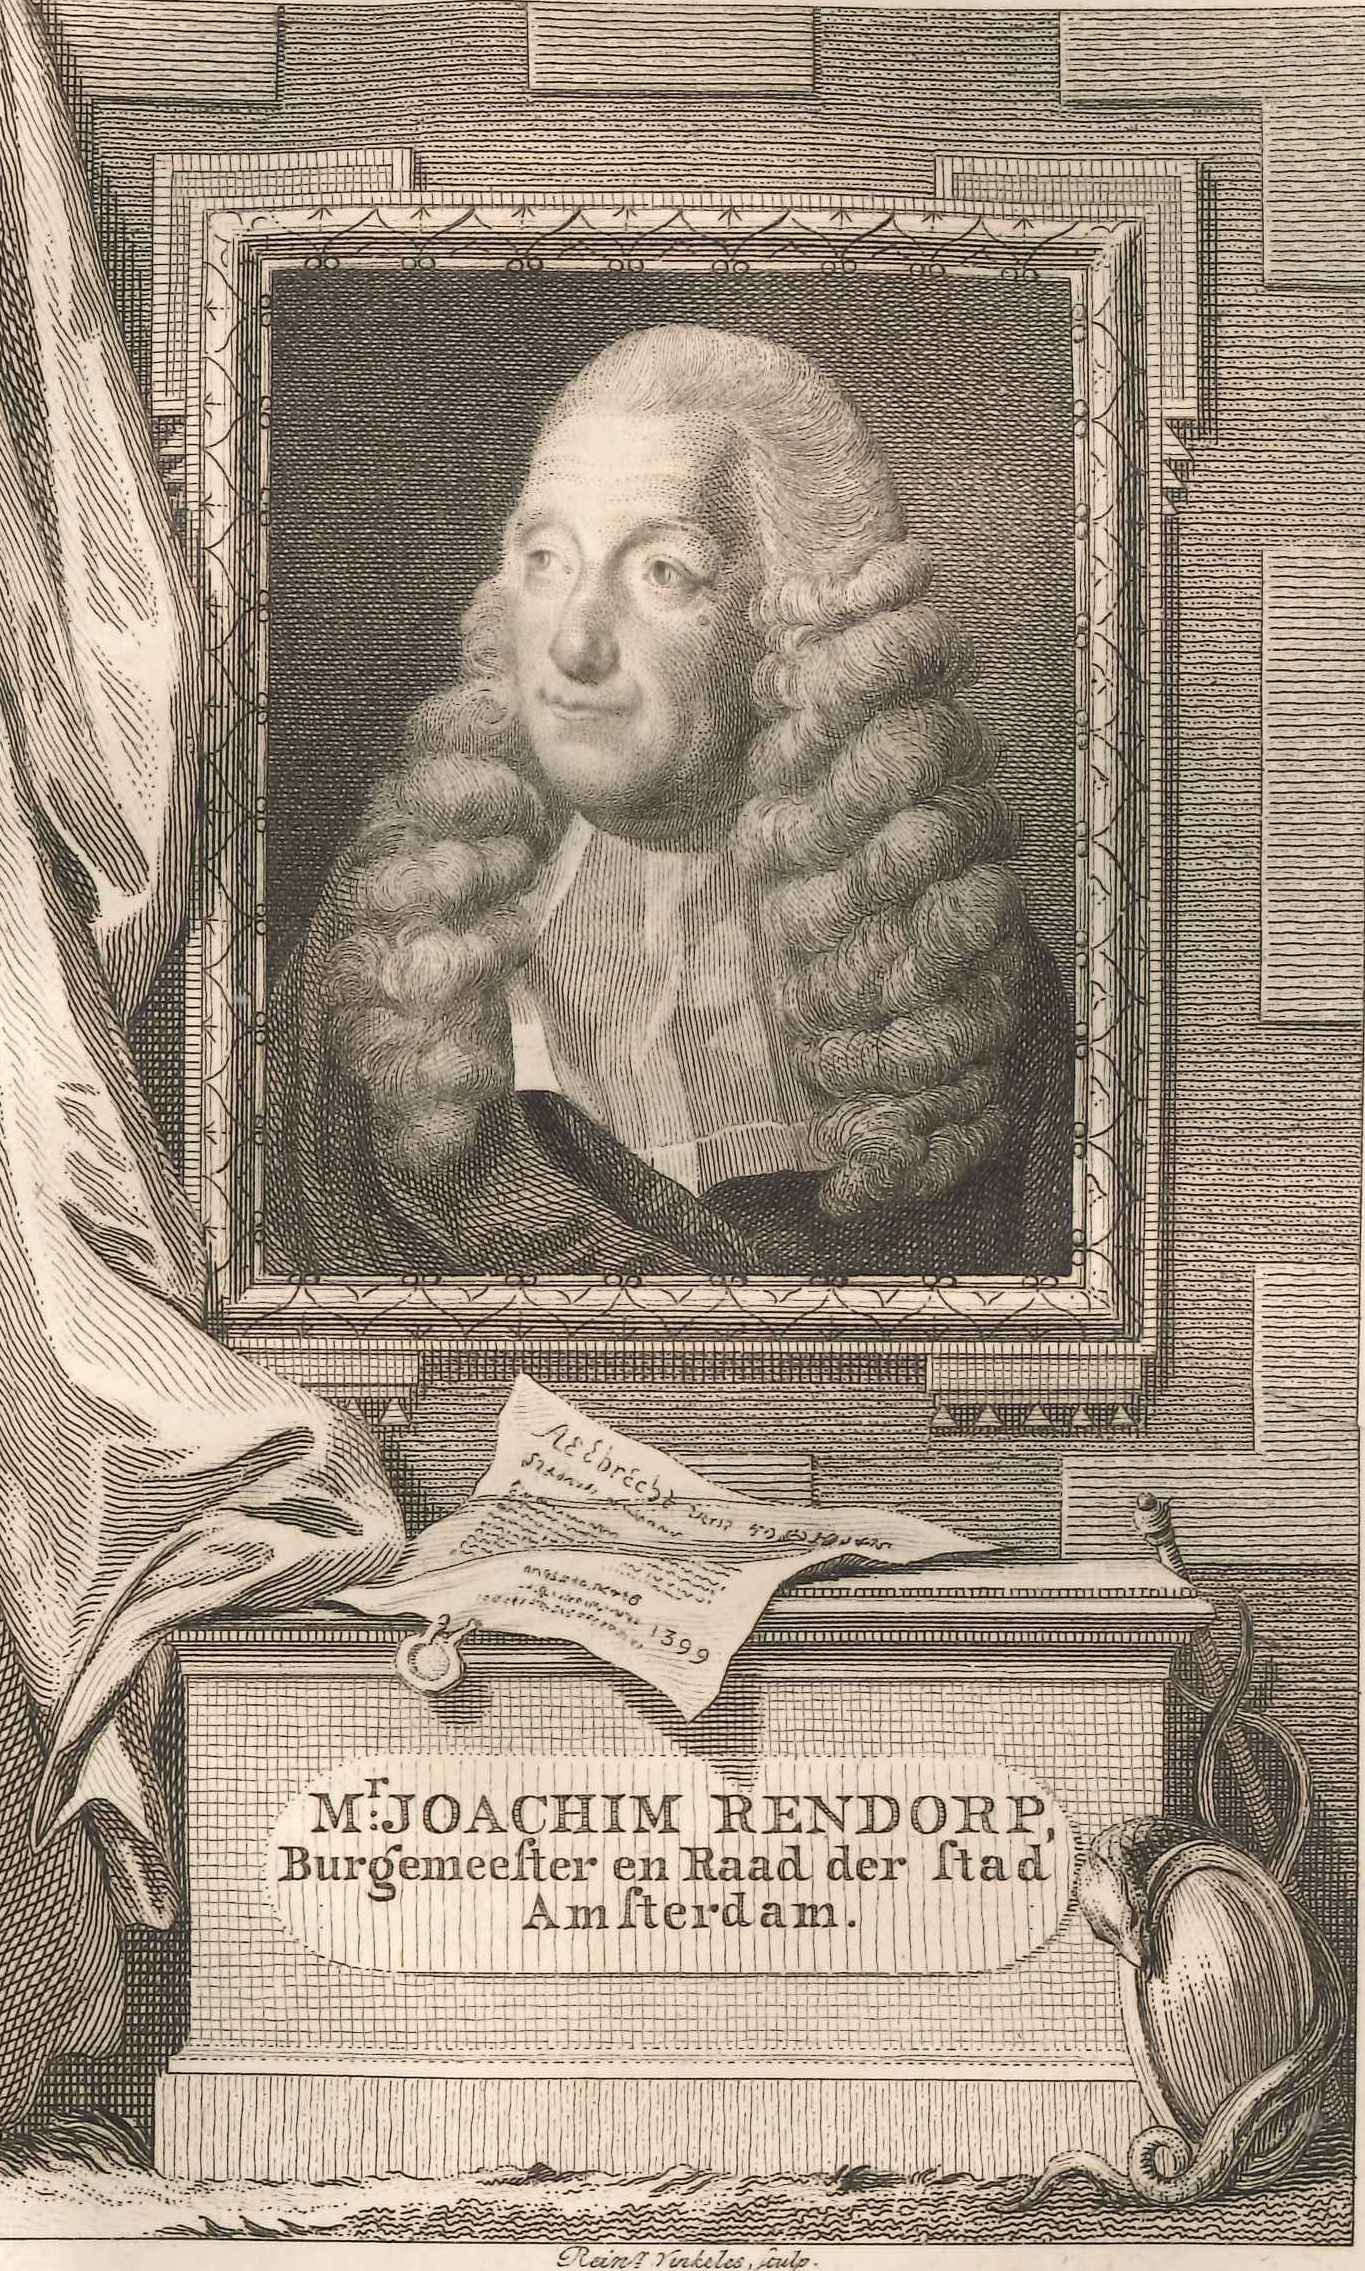 Mr. Joachim Rendorp, burgemeester van Amsterdam, 1795.